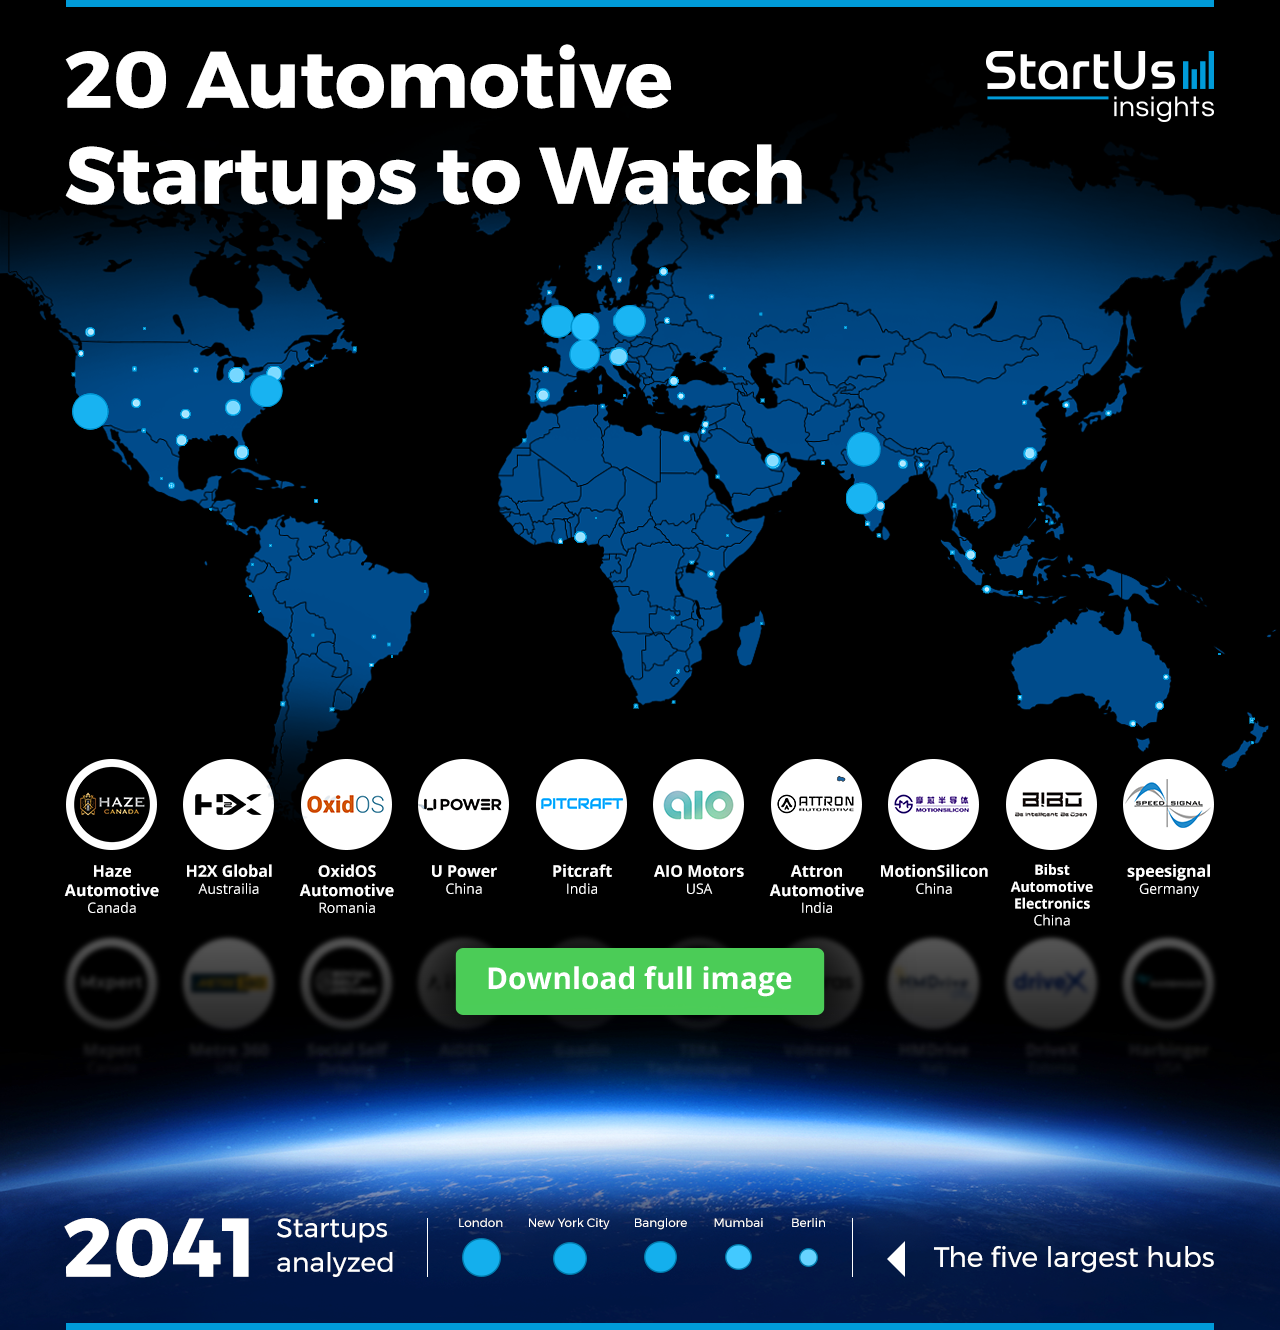 Automotive-Startups-to-Watch-Heat-Map-Blurred-StartUs-Insights-noresize